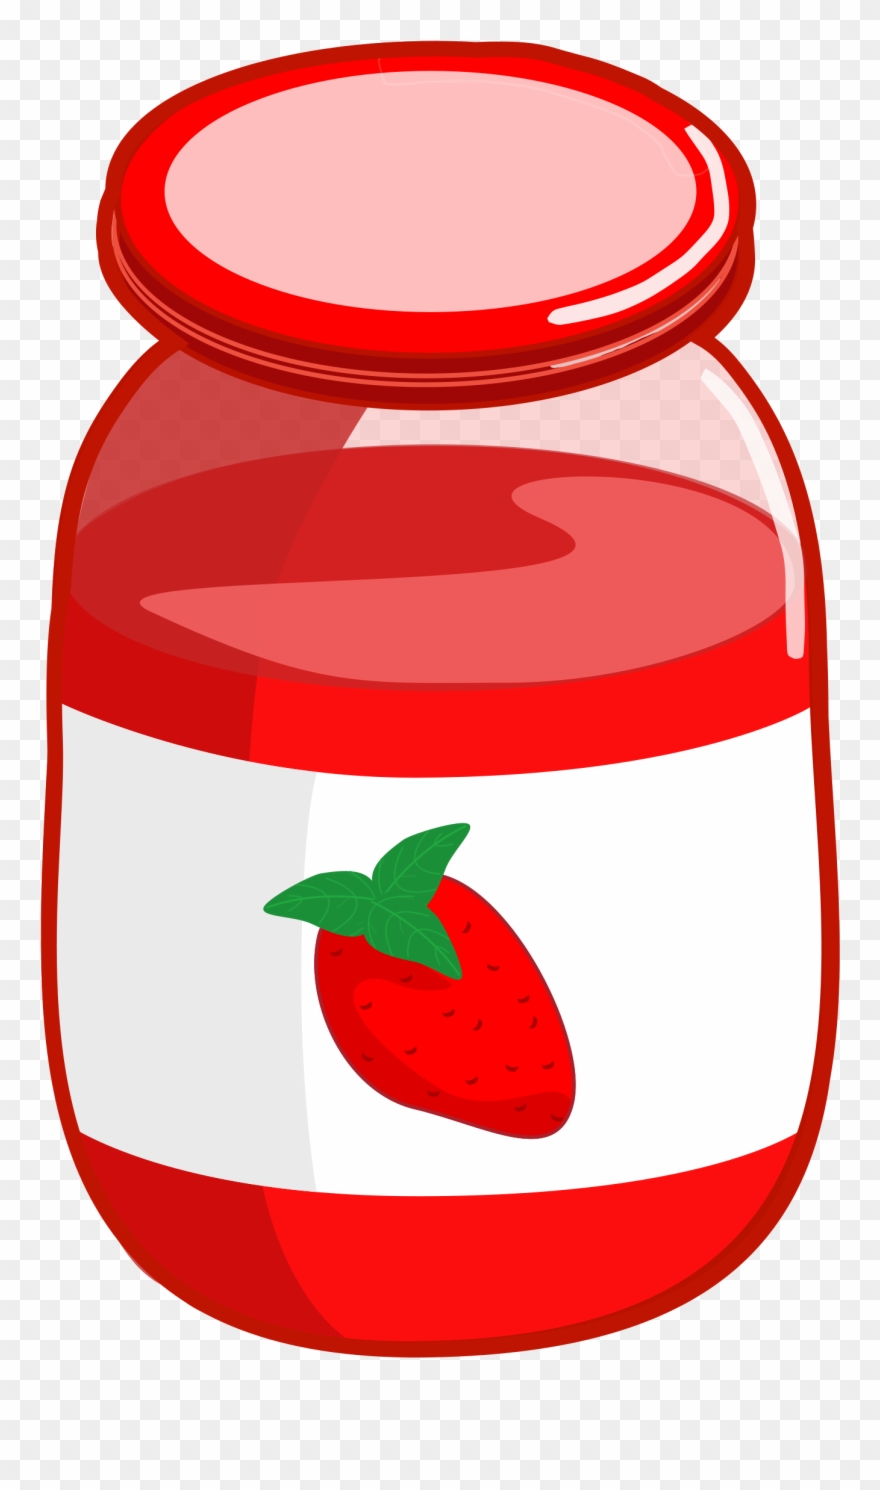 Jam clipart red jam. Clip art free download